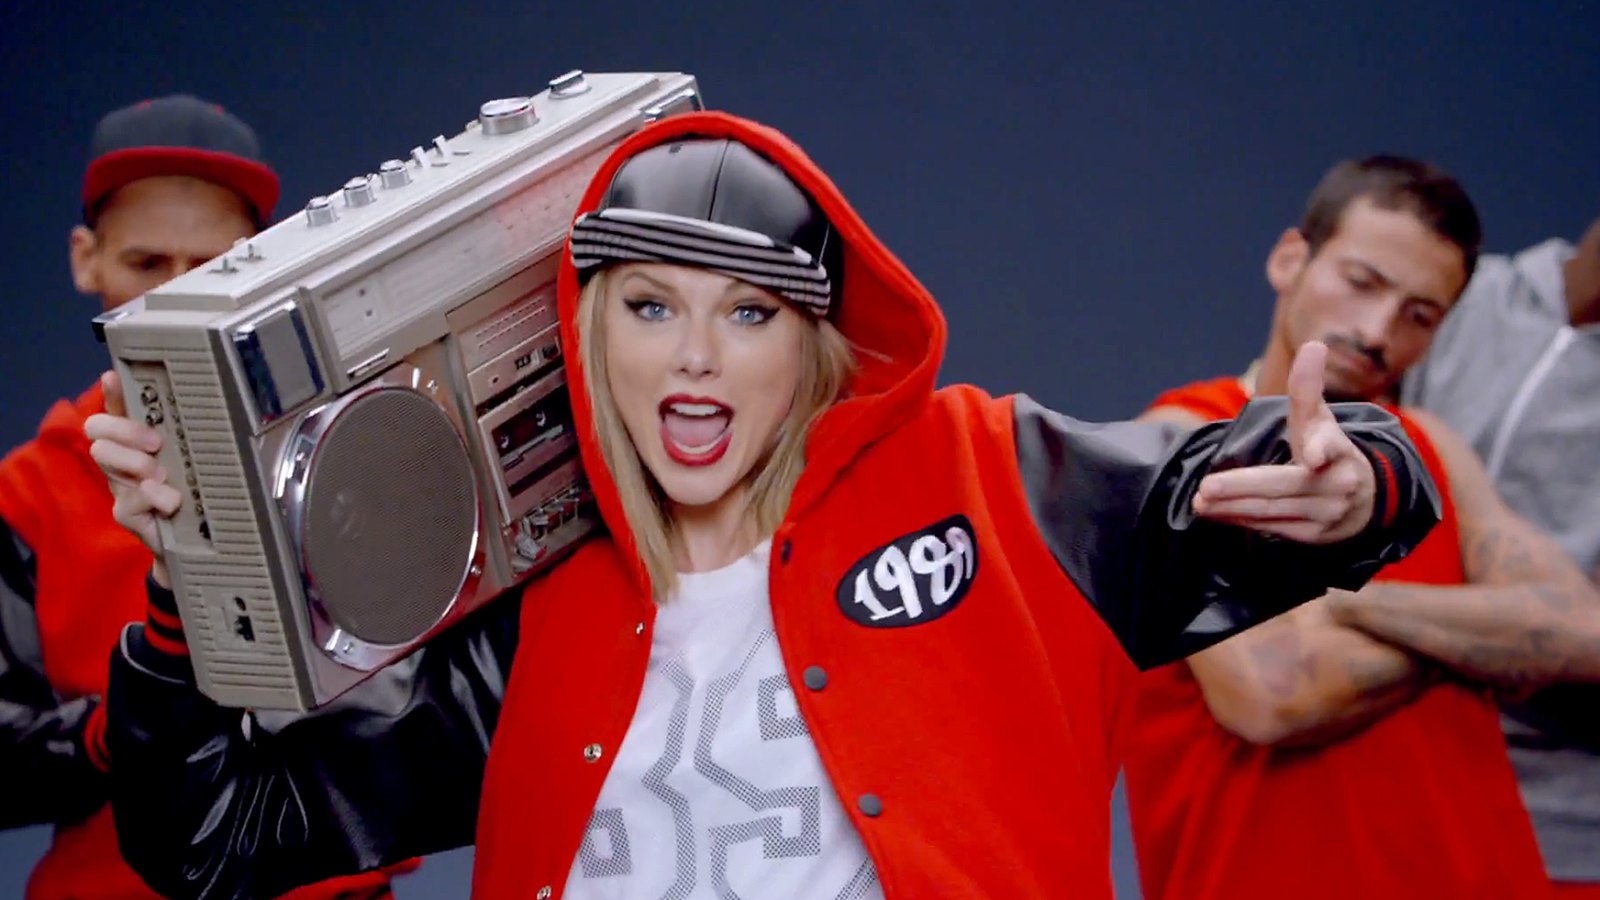 Включи новое видео песня. Taylor Swift Shake it off. Музыкальные видеоклипы. Музыкальная фотосессия. Клипы фото.